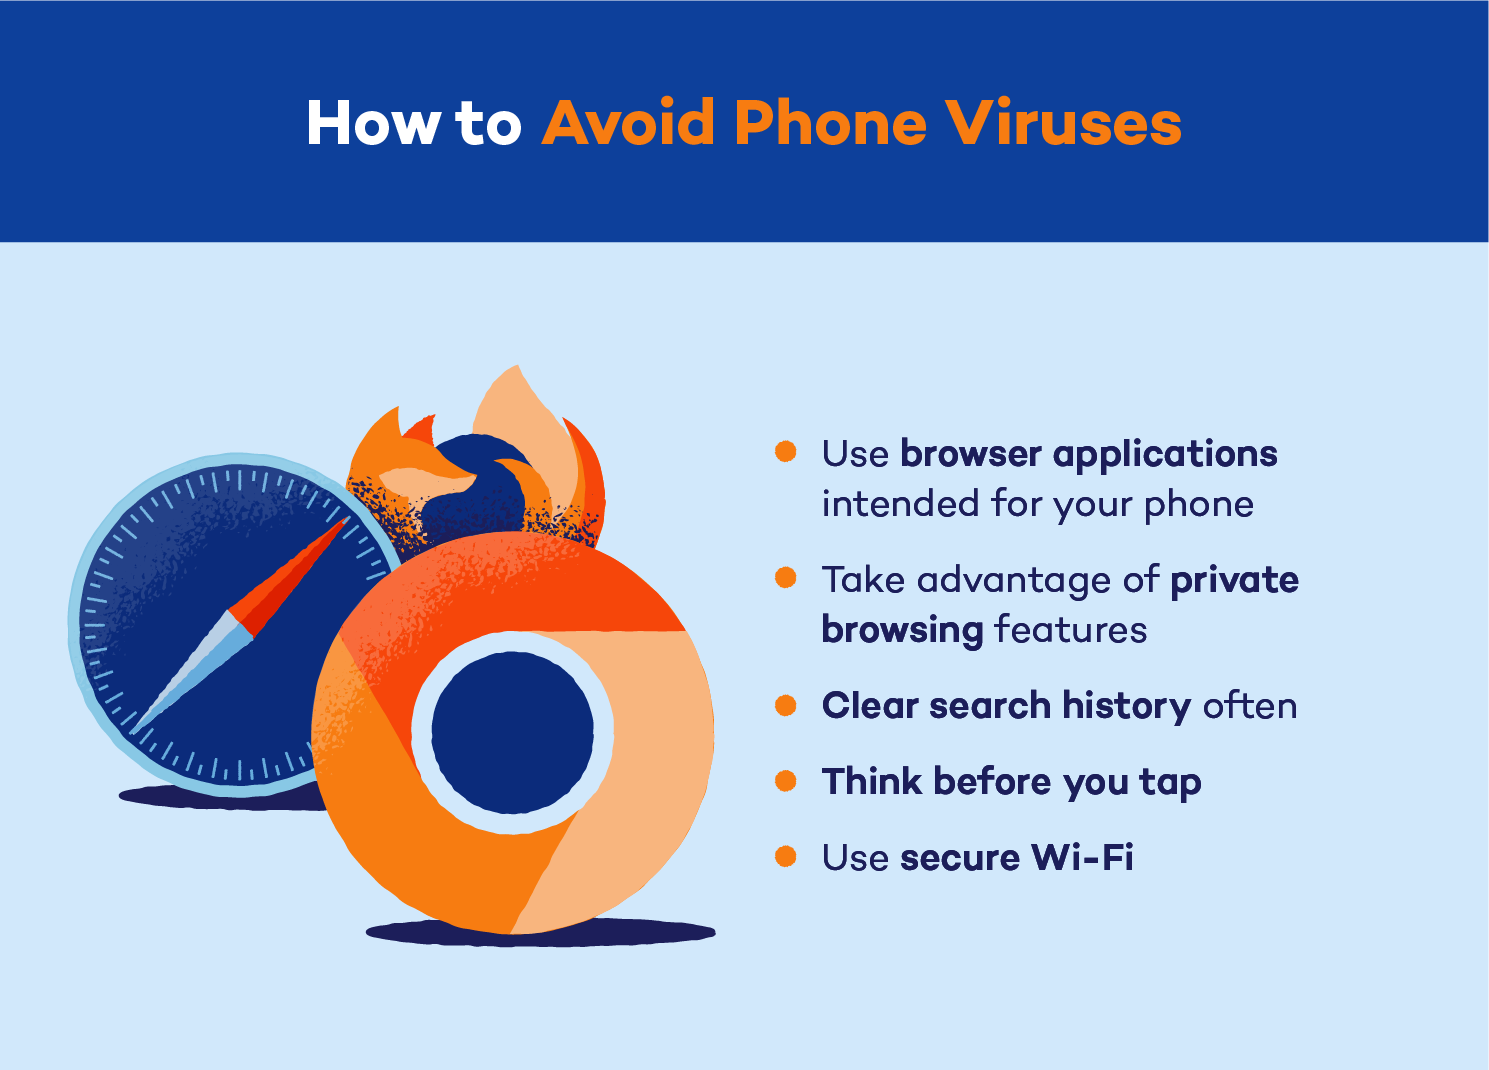 Illustration highlighting tips to avoid iPhone viruses: 